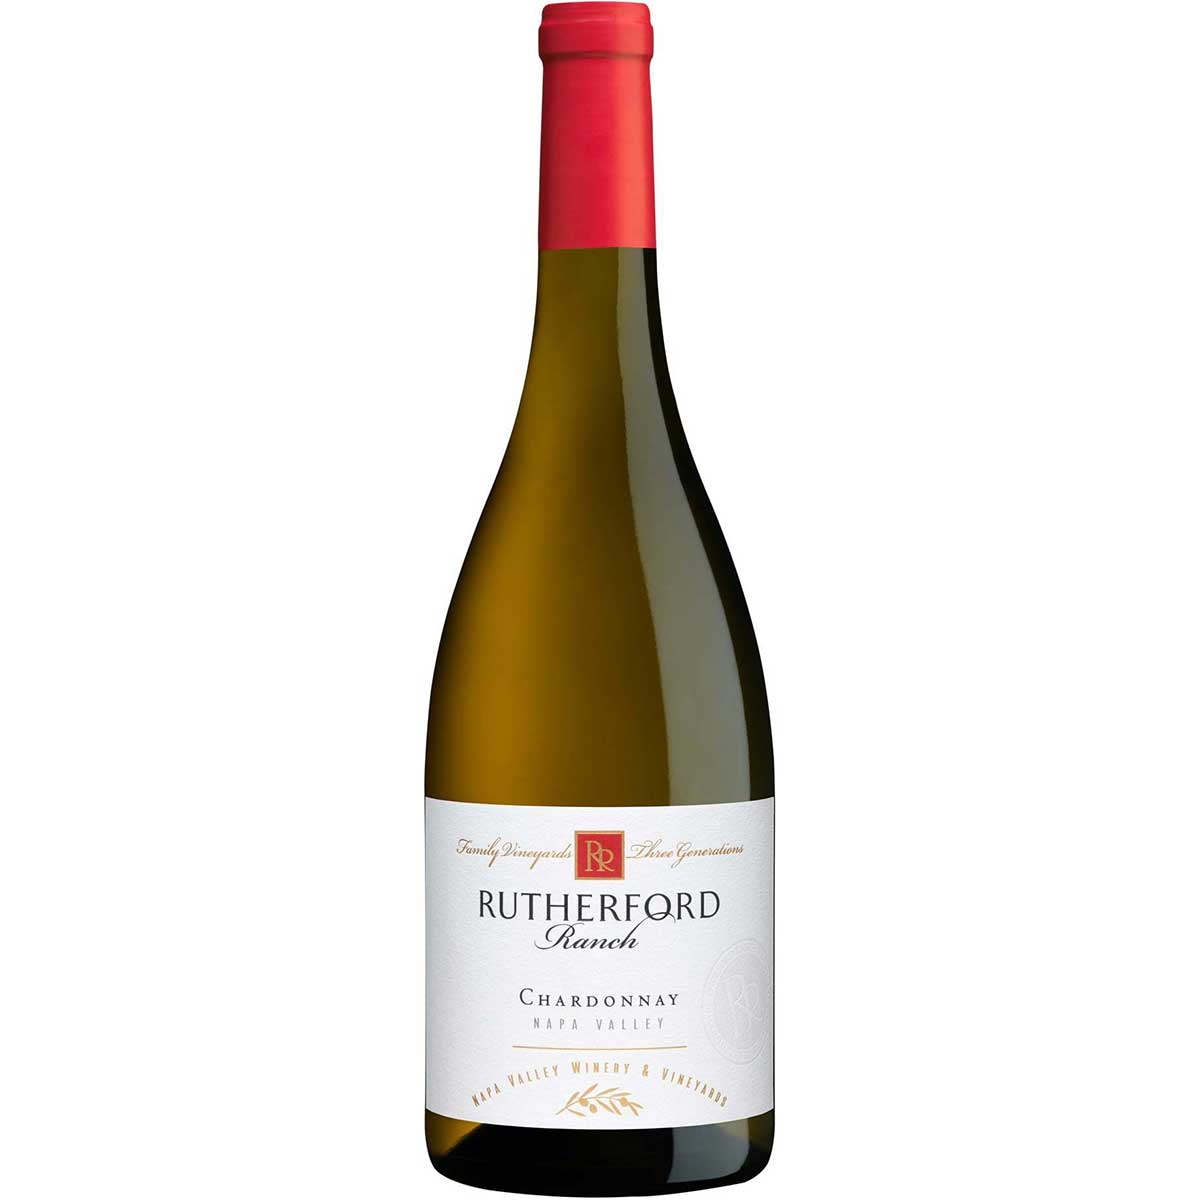 Rutherford Napa Valley Chardonnay 2019